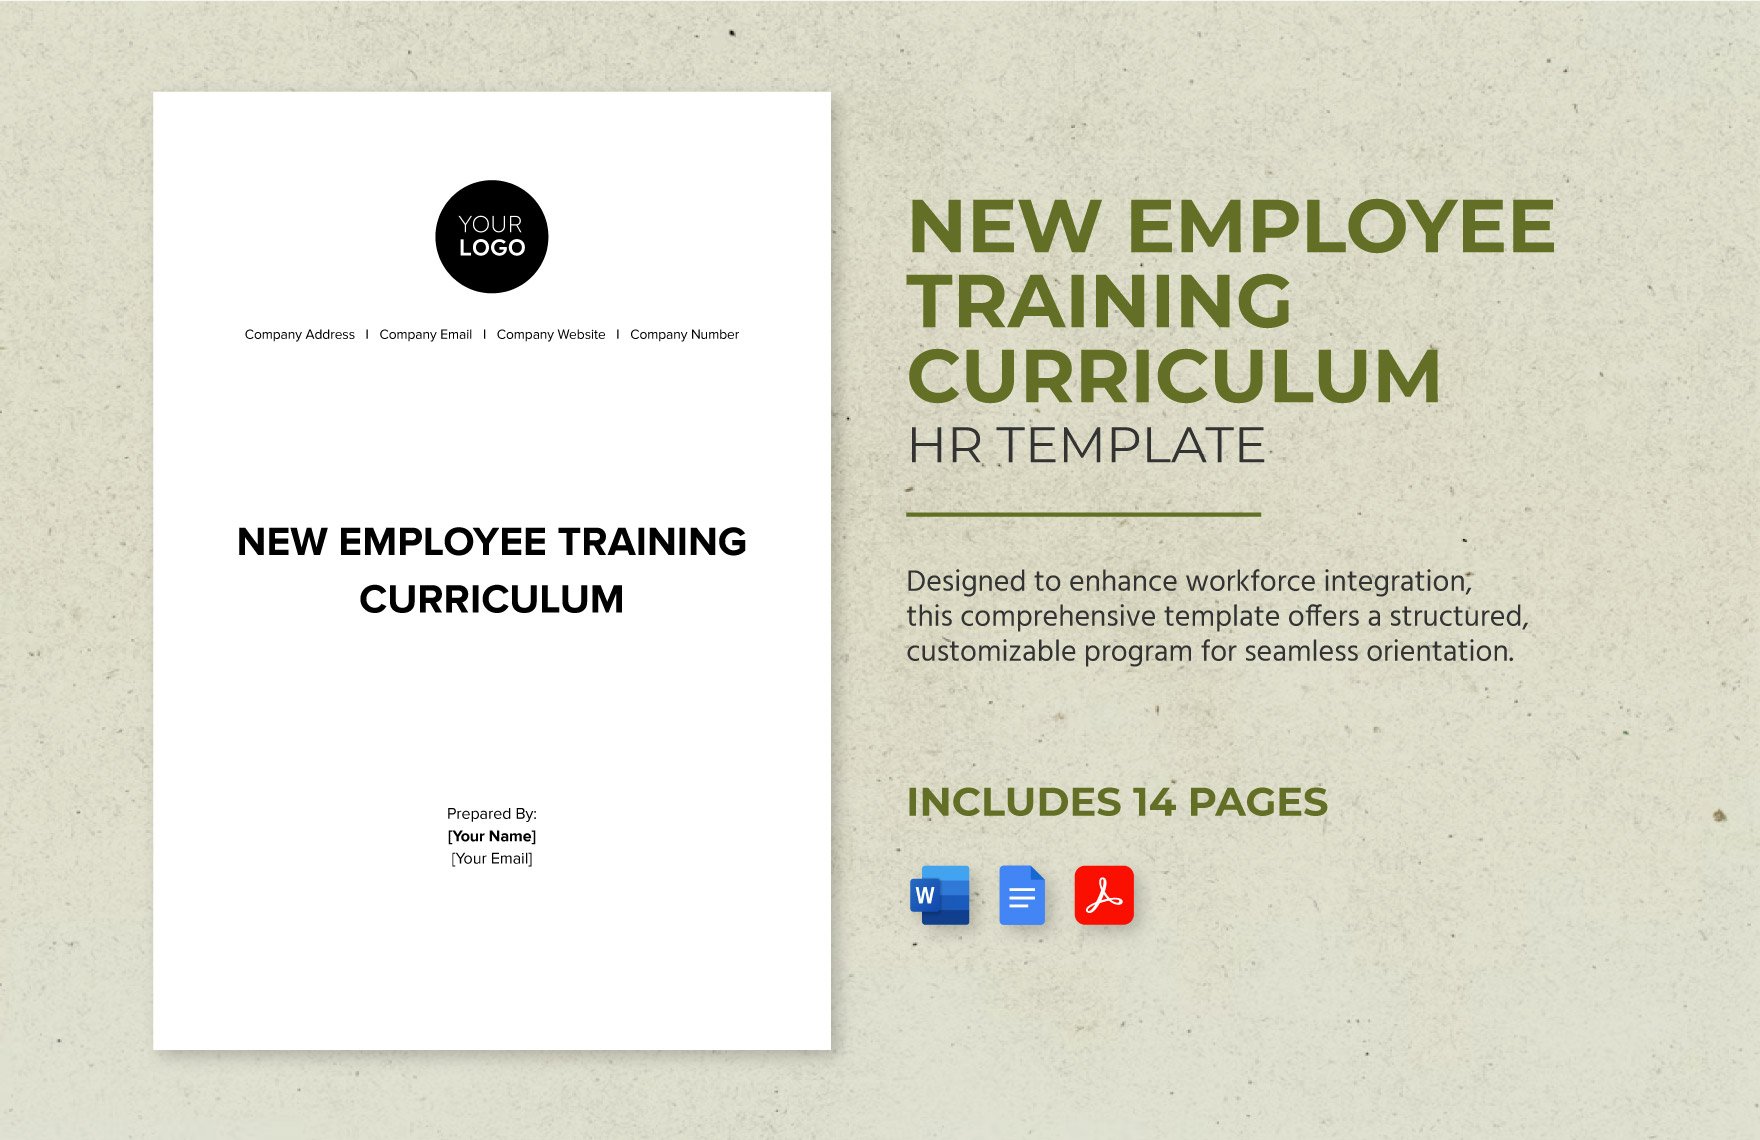 New Employee Training Curriculum HR Template in Word, Google Docs, PDF